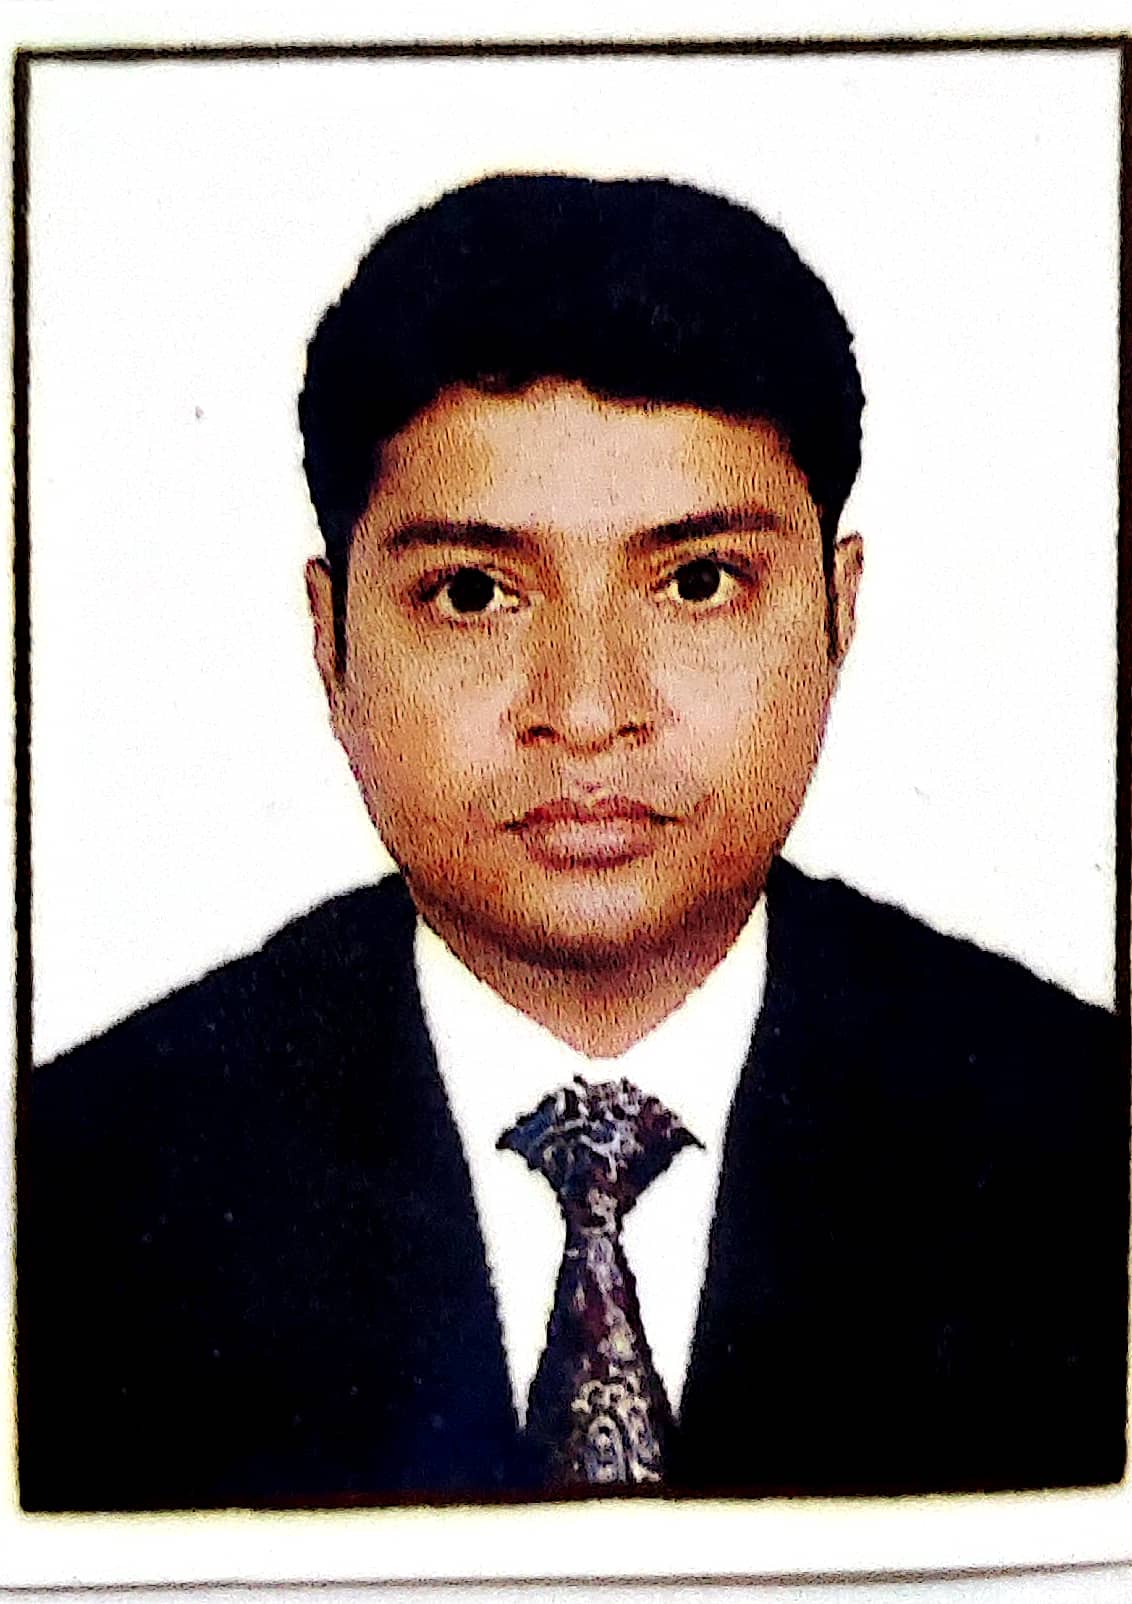 Mr Rajib Das